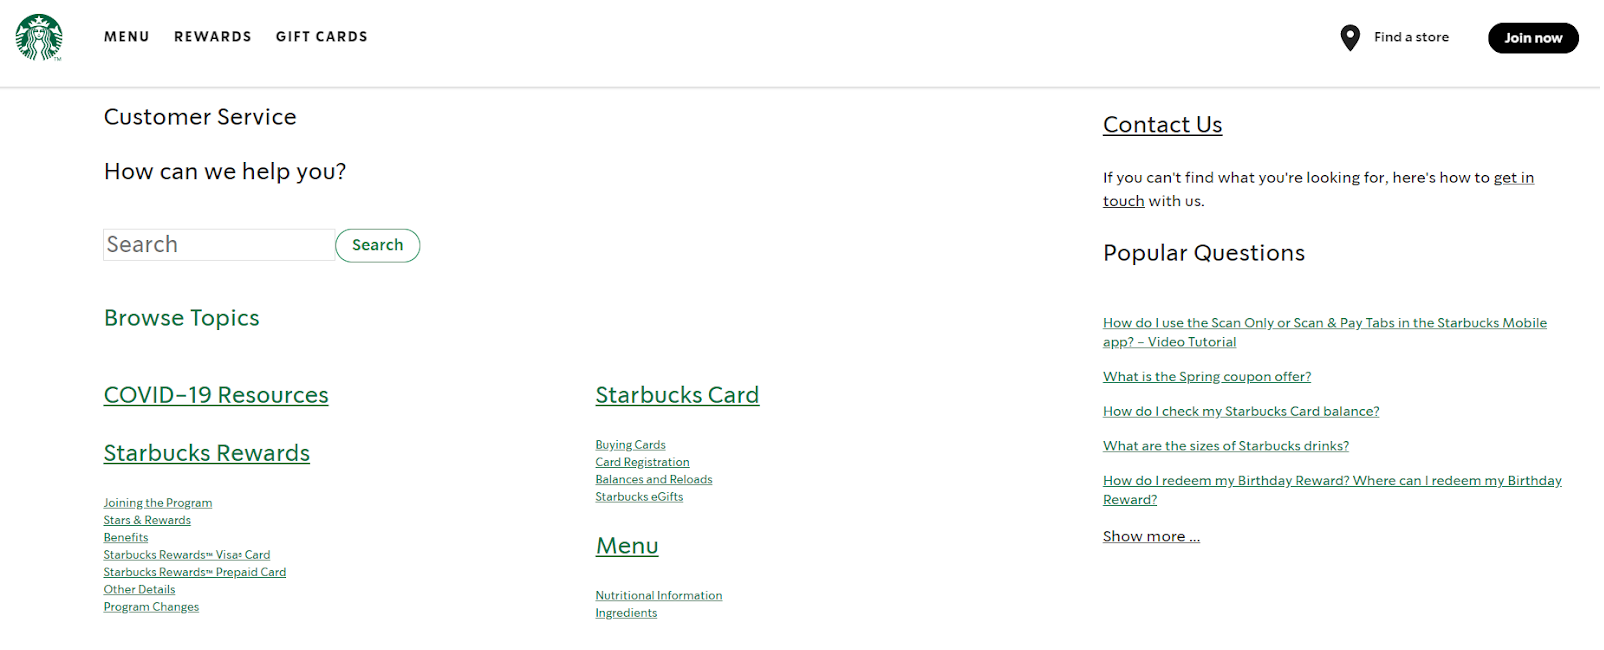 Starbucks - FAQ Page Example